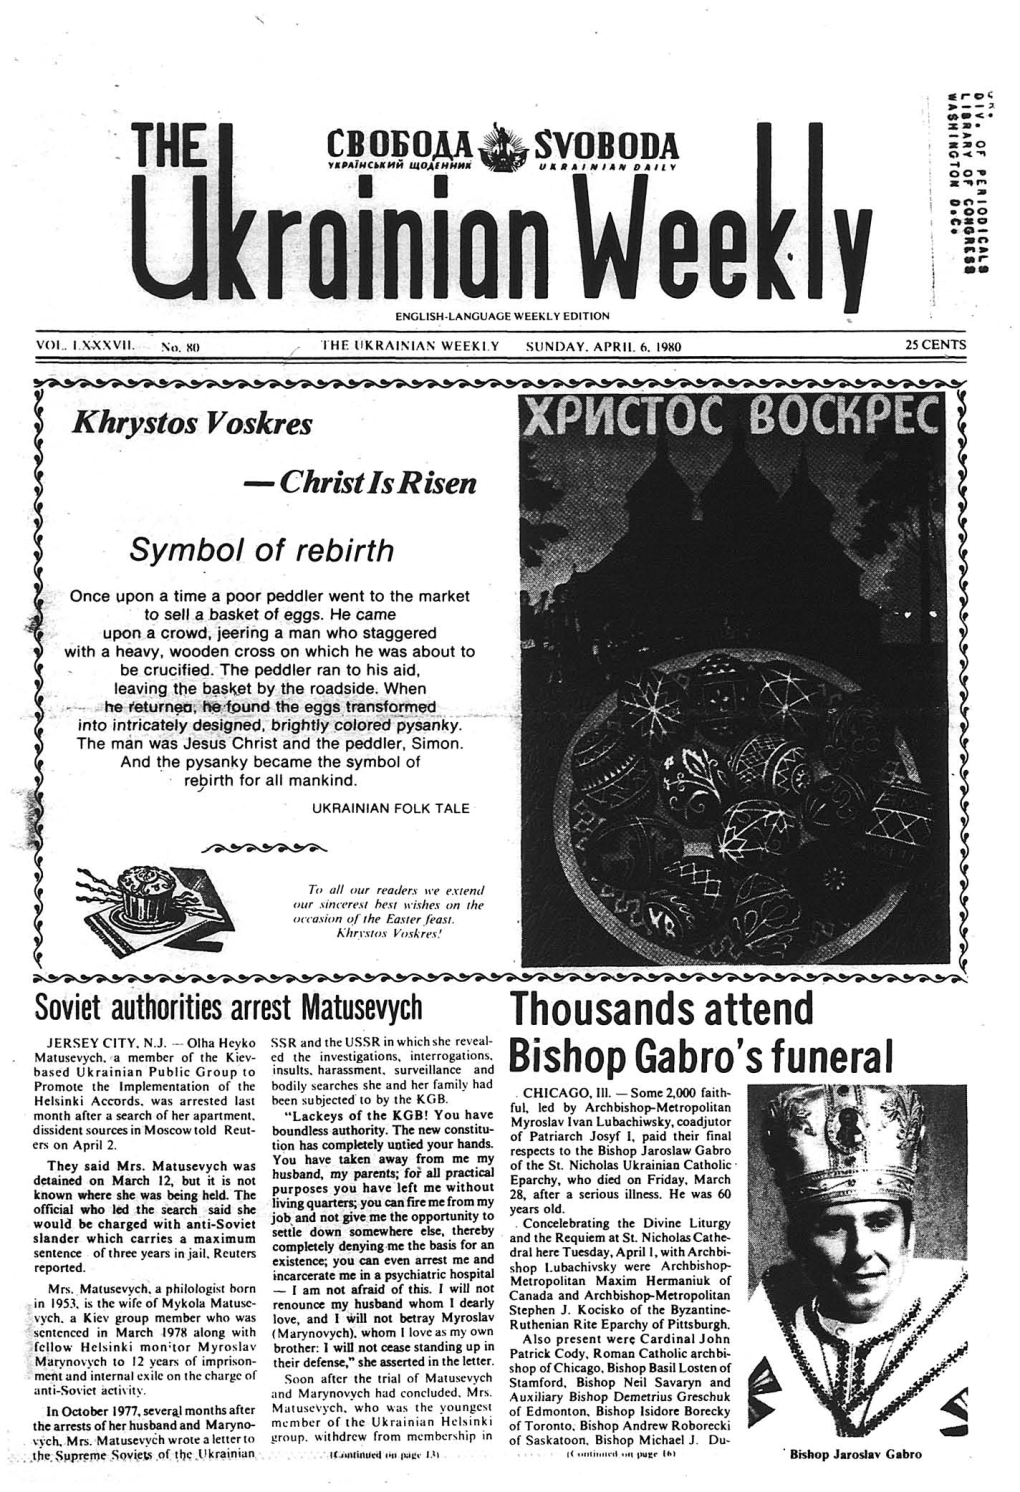 The Ukrainian Weekly 1980, No.14